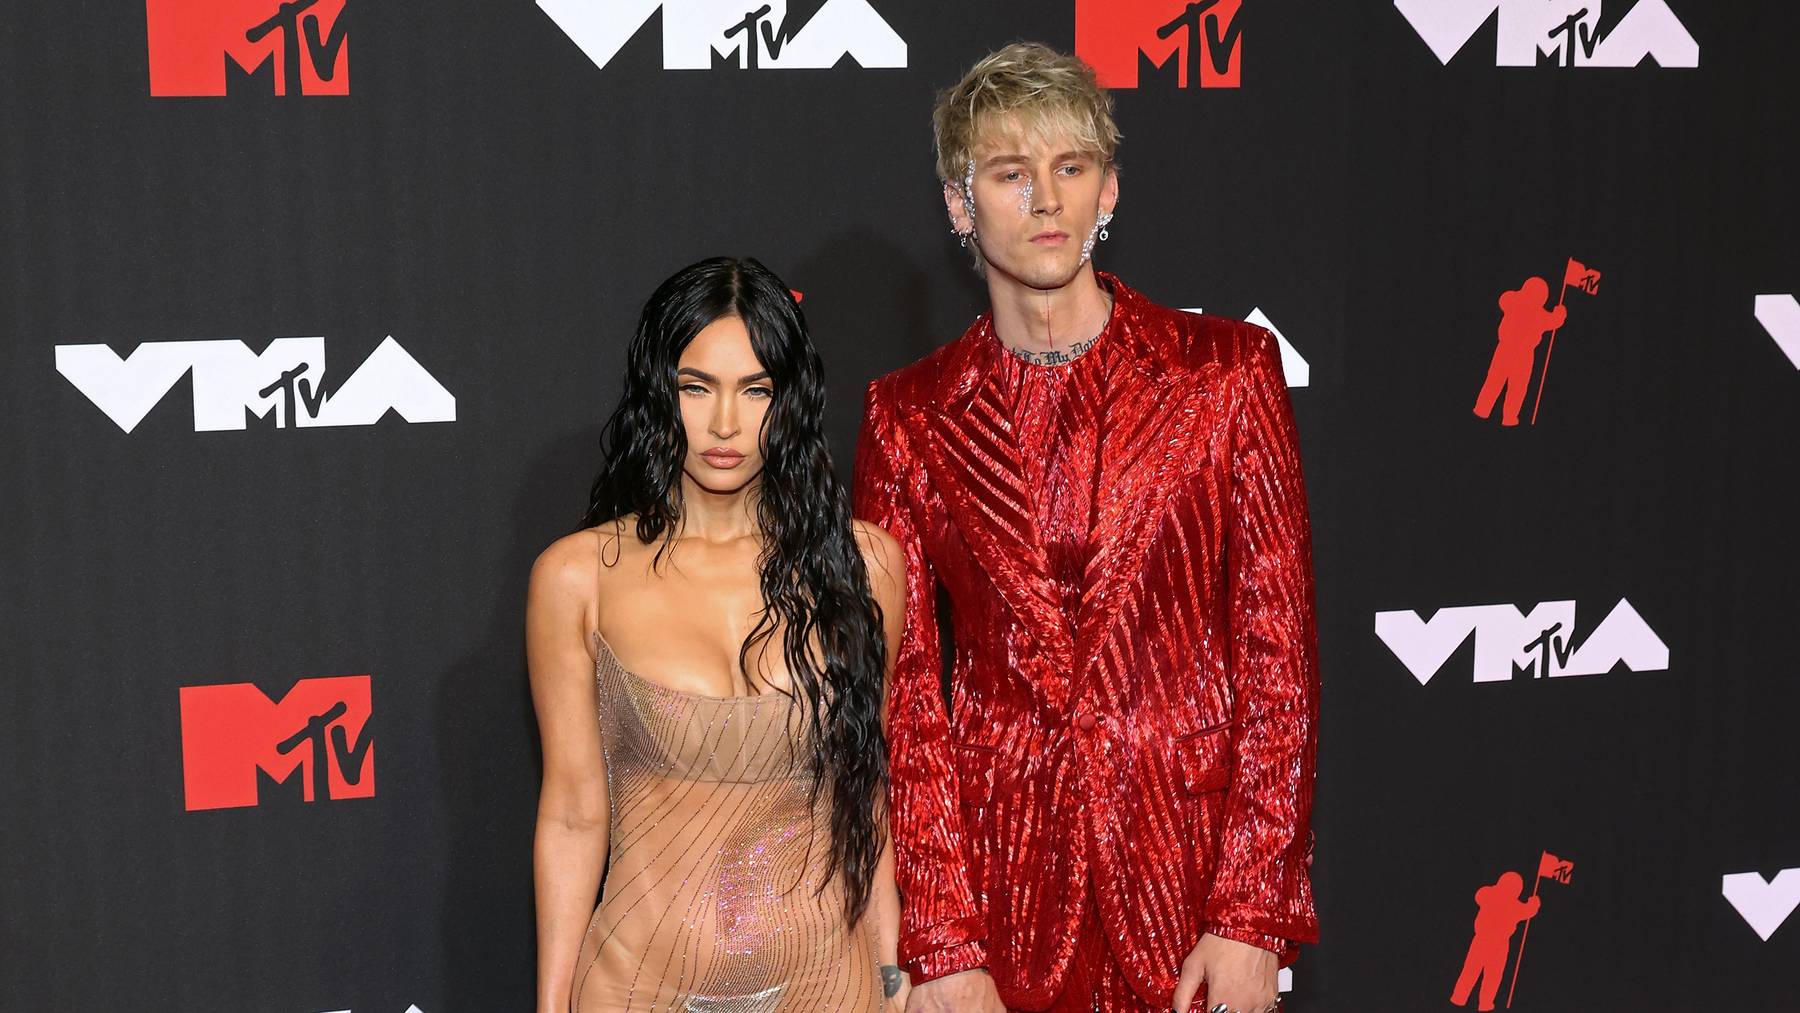 Megan Fox und Colson Baker aka Machine Gun Kelly an den MTV Video Music Awards 2021.